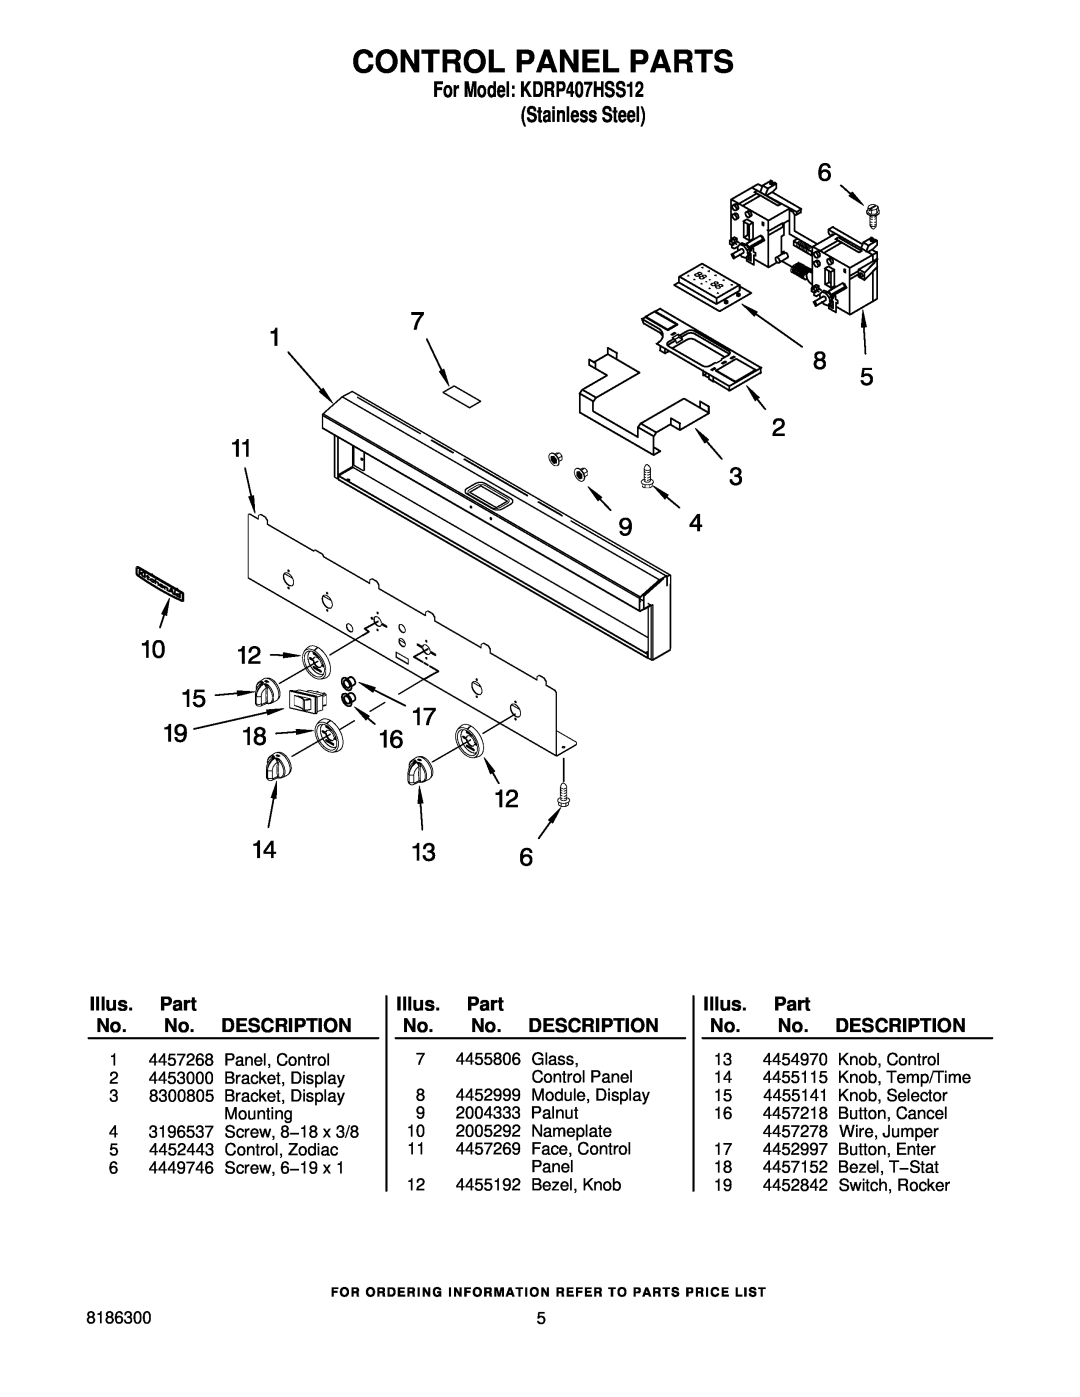 KitchenAid manual Control Panel Parts, For Model KDRP407HSS12 Stainless Steel, Illus. Part No. No. DESCRIPTION 